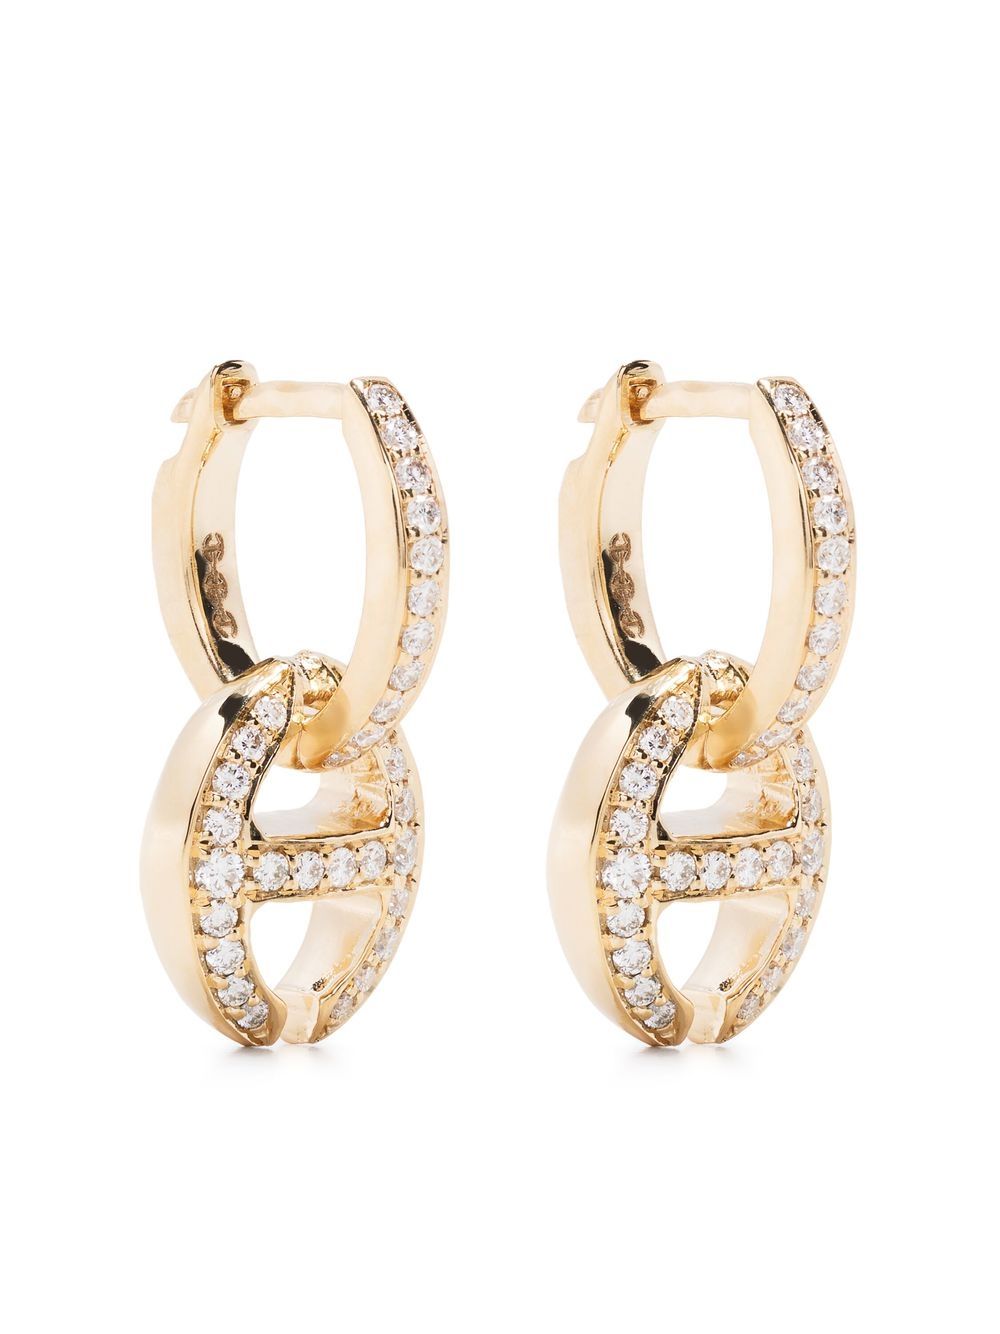 HOORSENBUHS 18kt yellow gold diamond Klaasp earrings